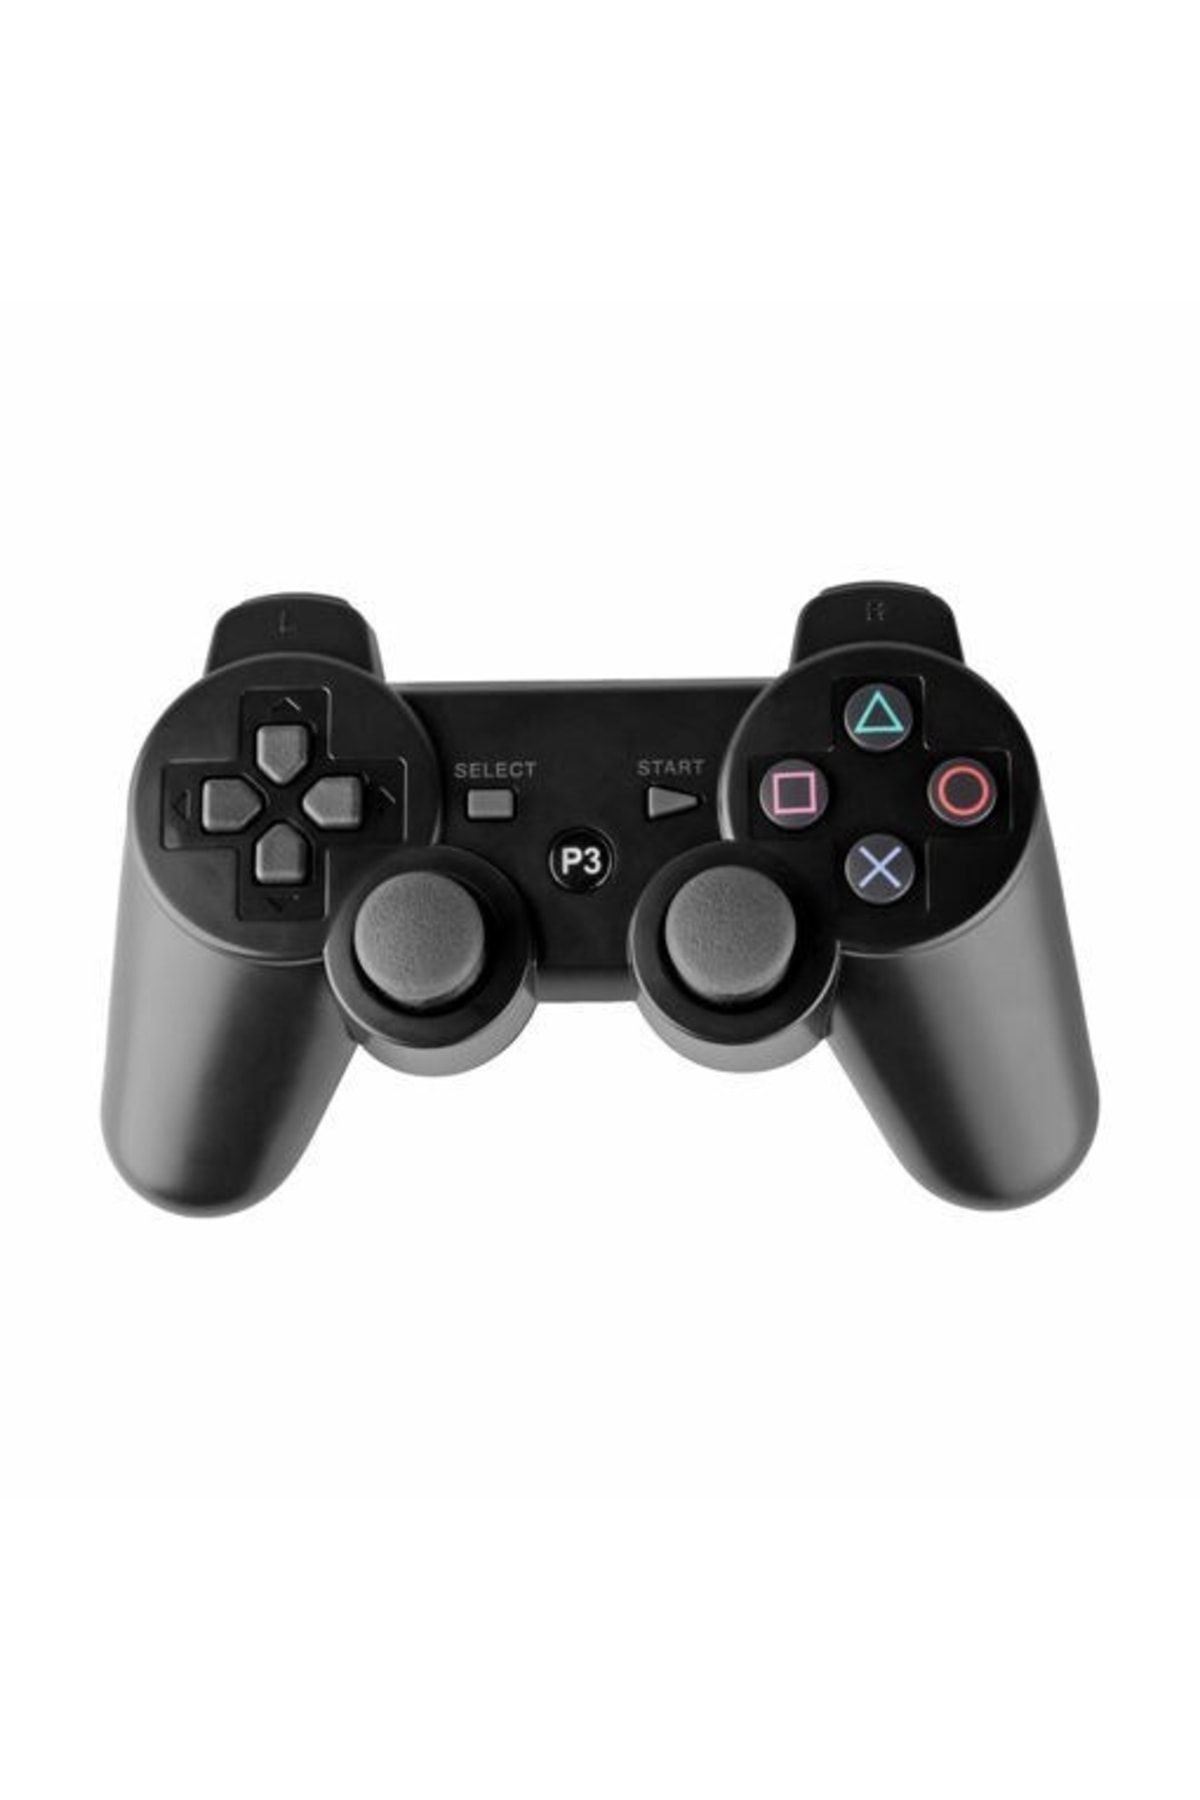 BYOZTEK Playstation Ps3 Oyun Kolu Dualshock 3 Wırelless Controller